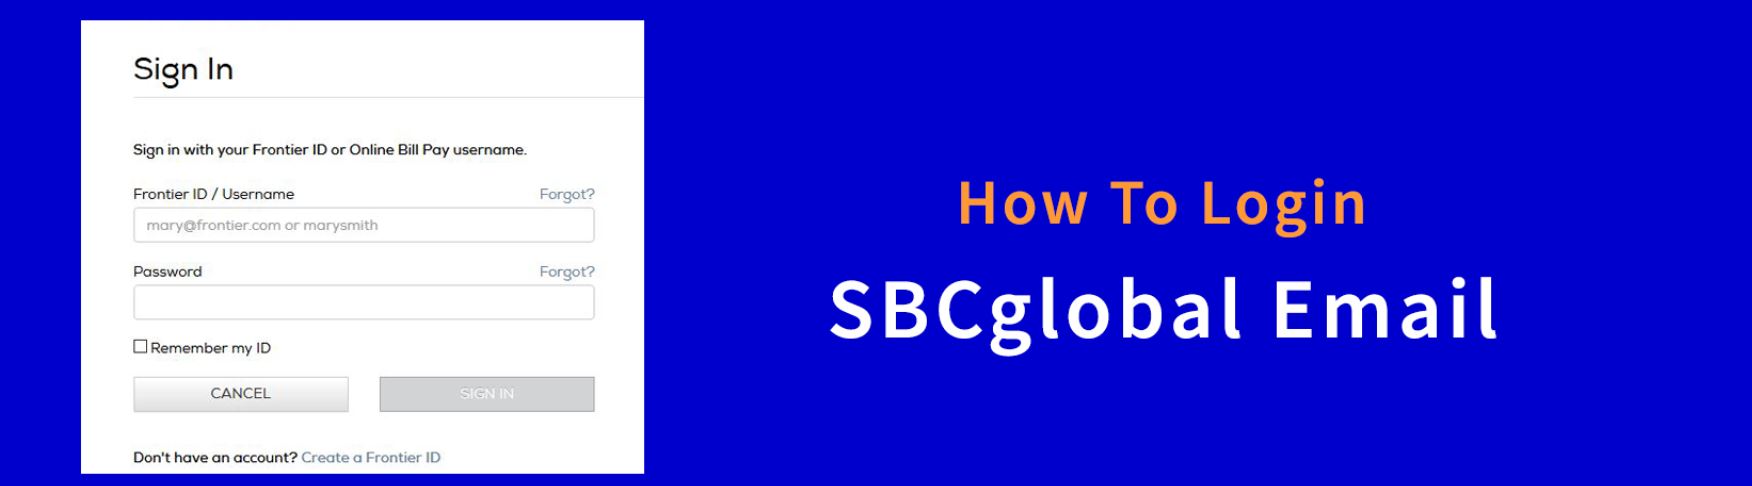 SBCGlobal Email Login Guide